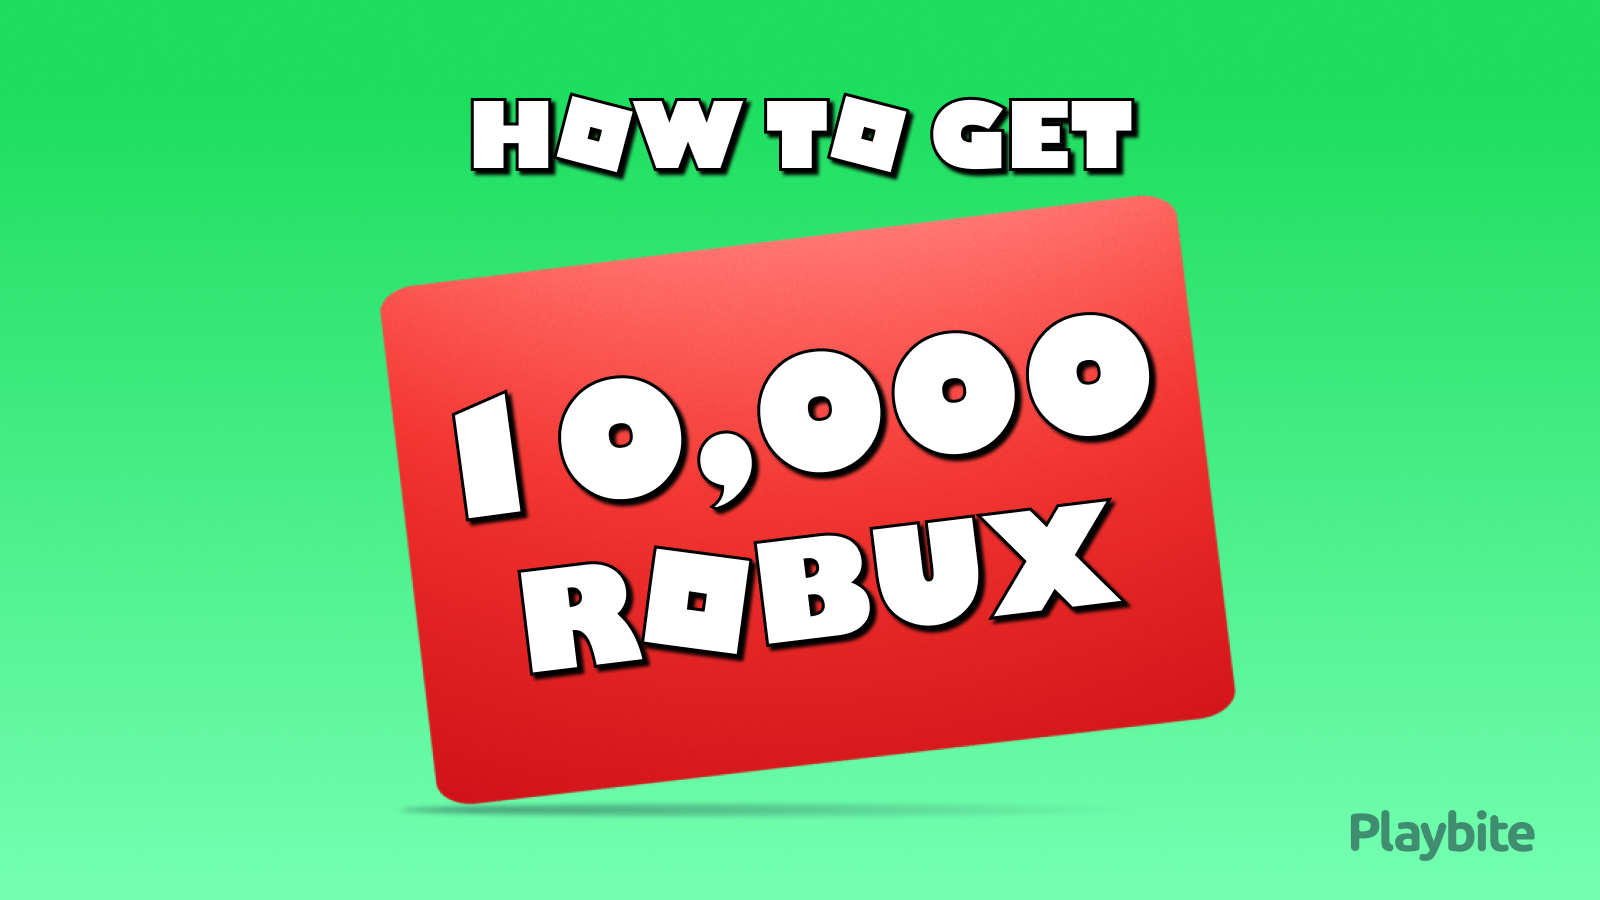 Roblox E-Gift Card (Global) $10 / 800 Robux